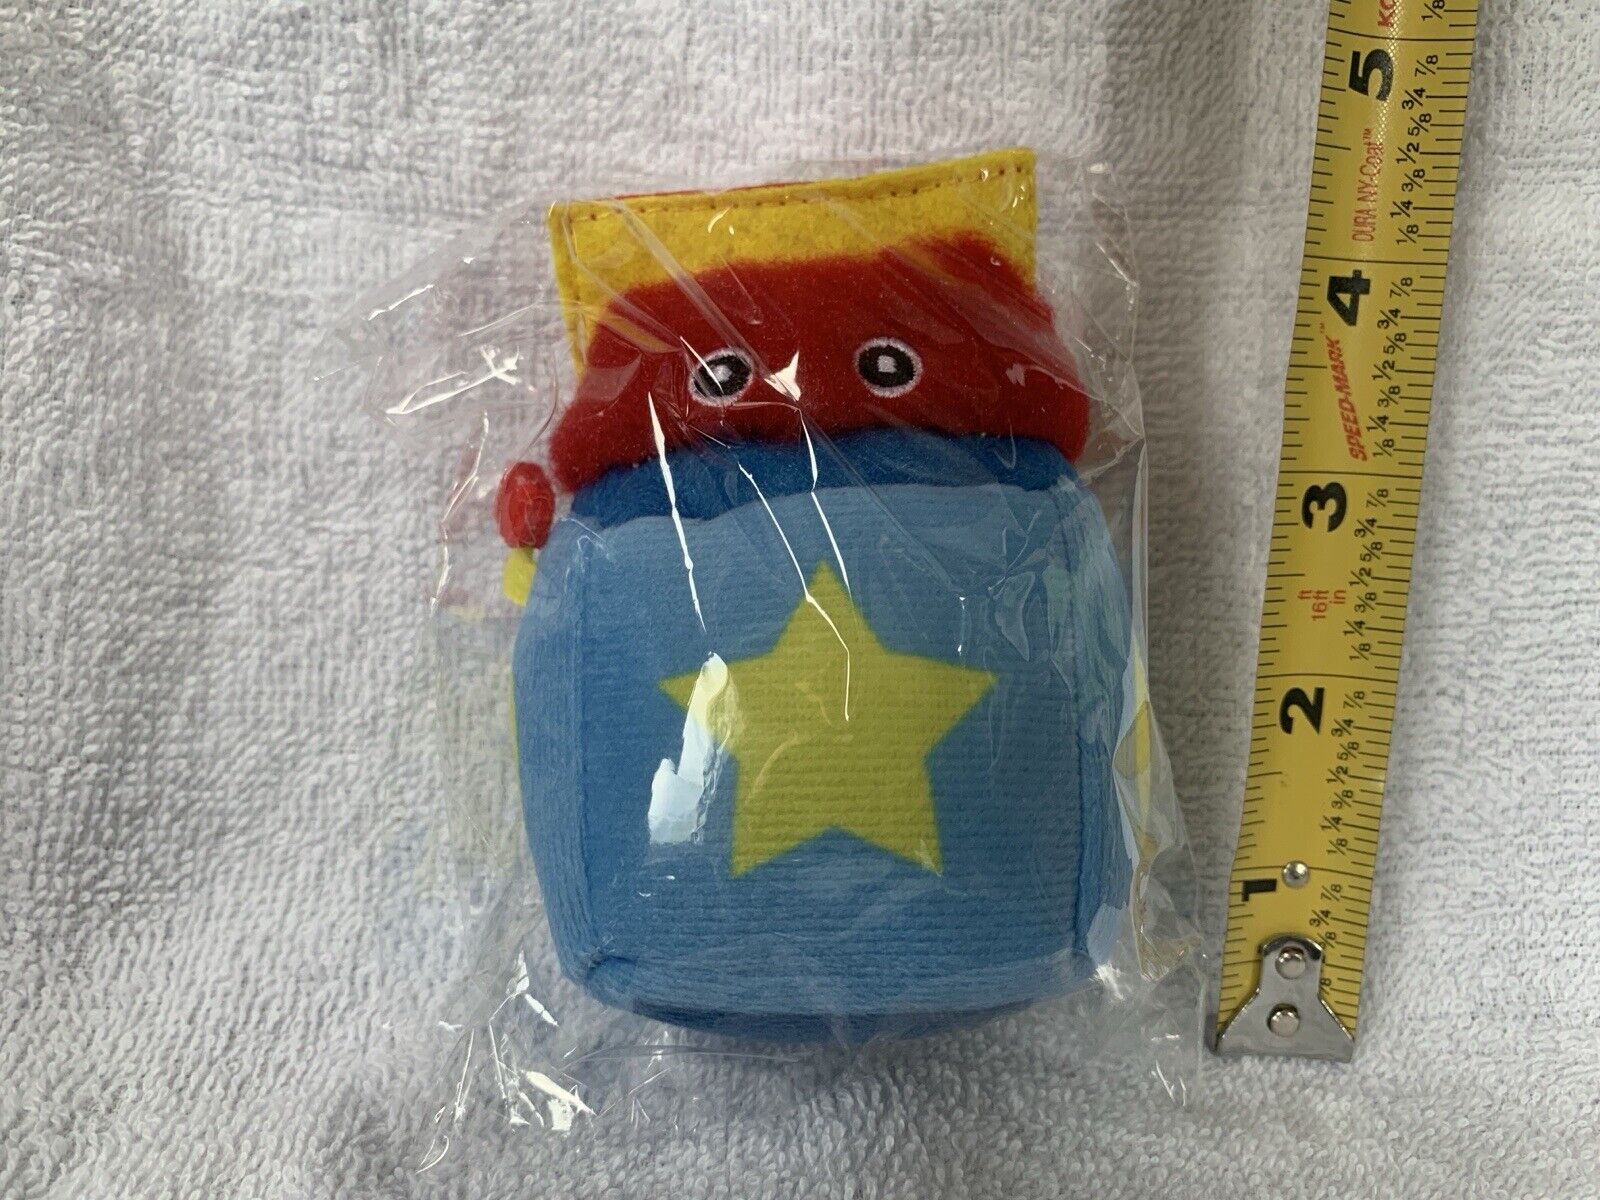 Poppy Playtime Boxy Boo Mini Plush Mascot 4” Ball Chain w/ Tag Infolens #2 F/S